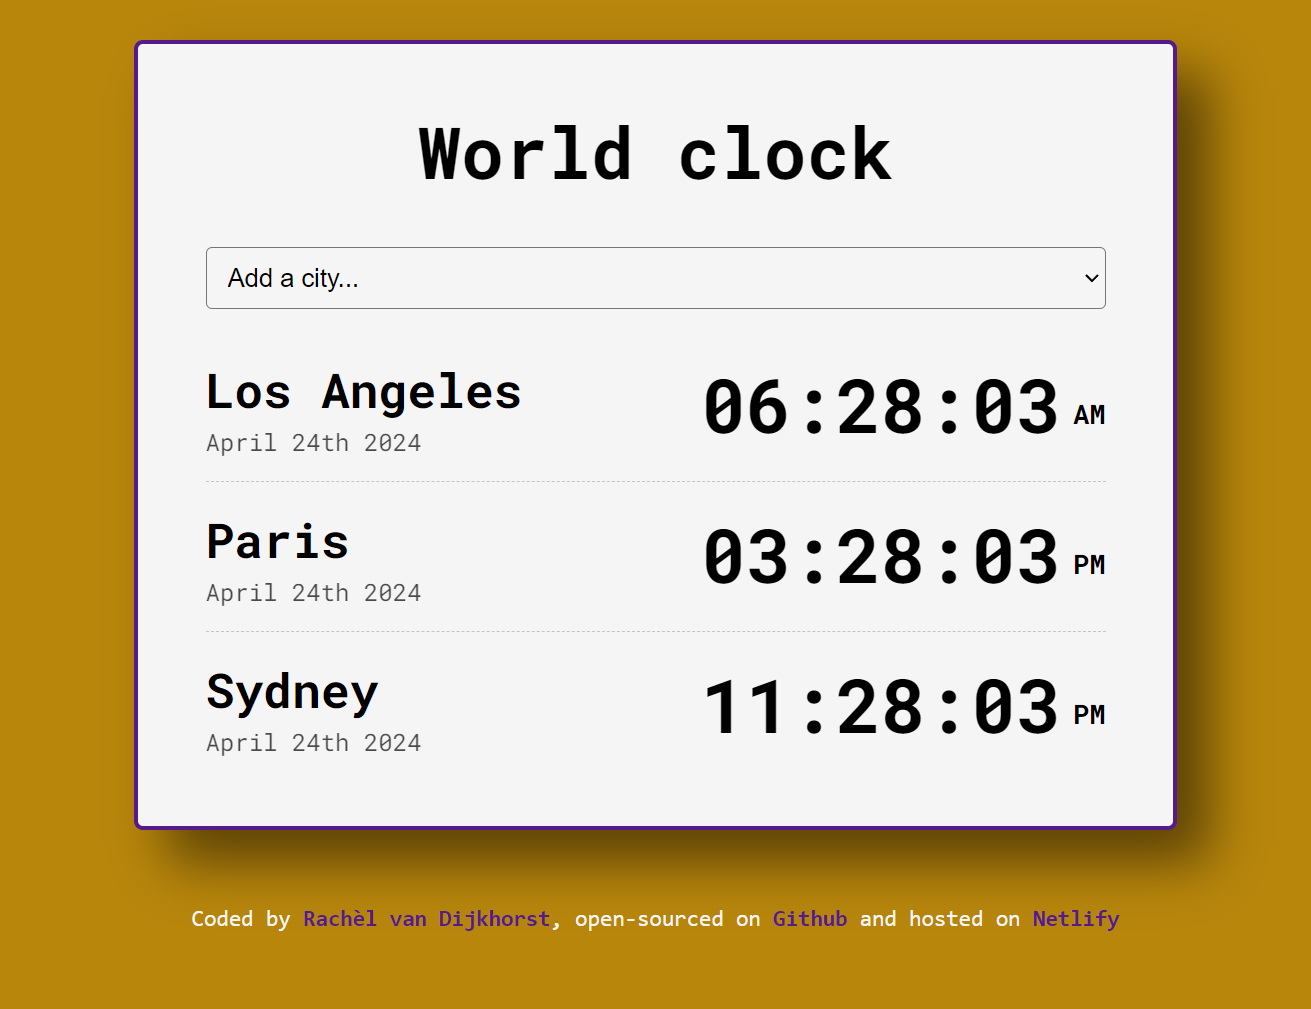 Image of the World Clock Rachèl van Dijkhorst created.